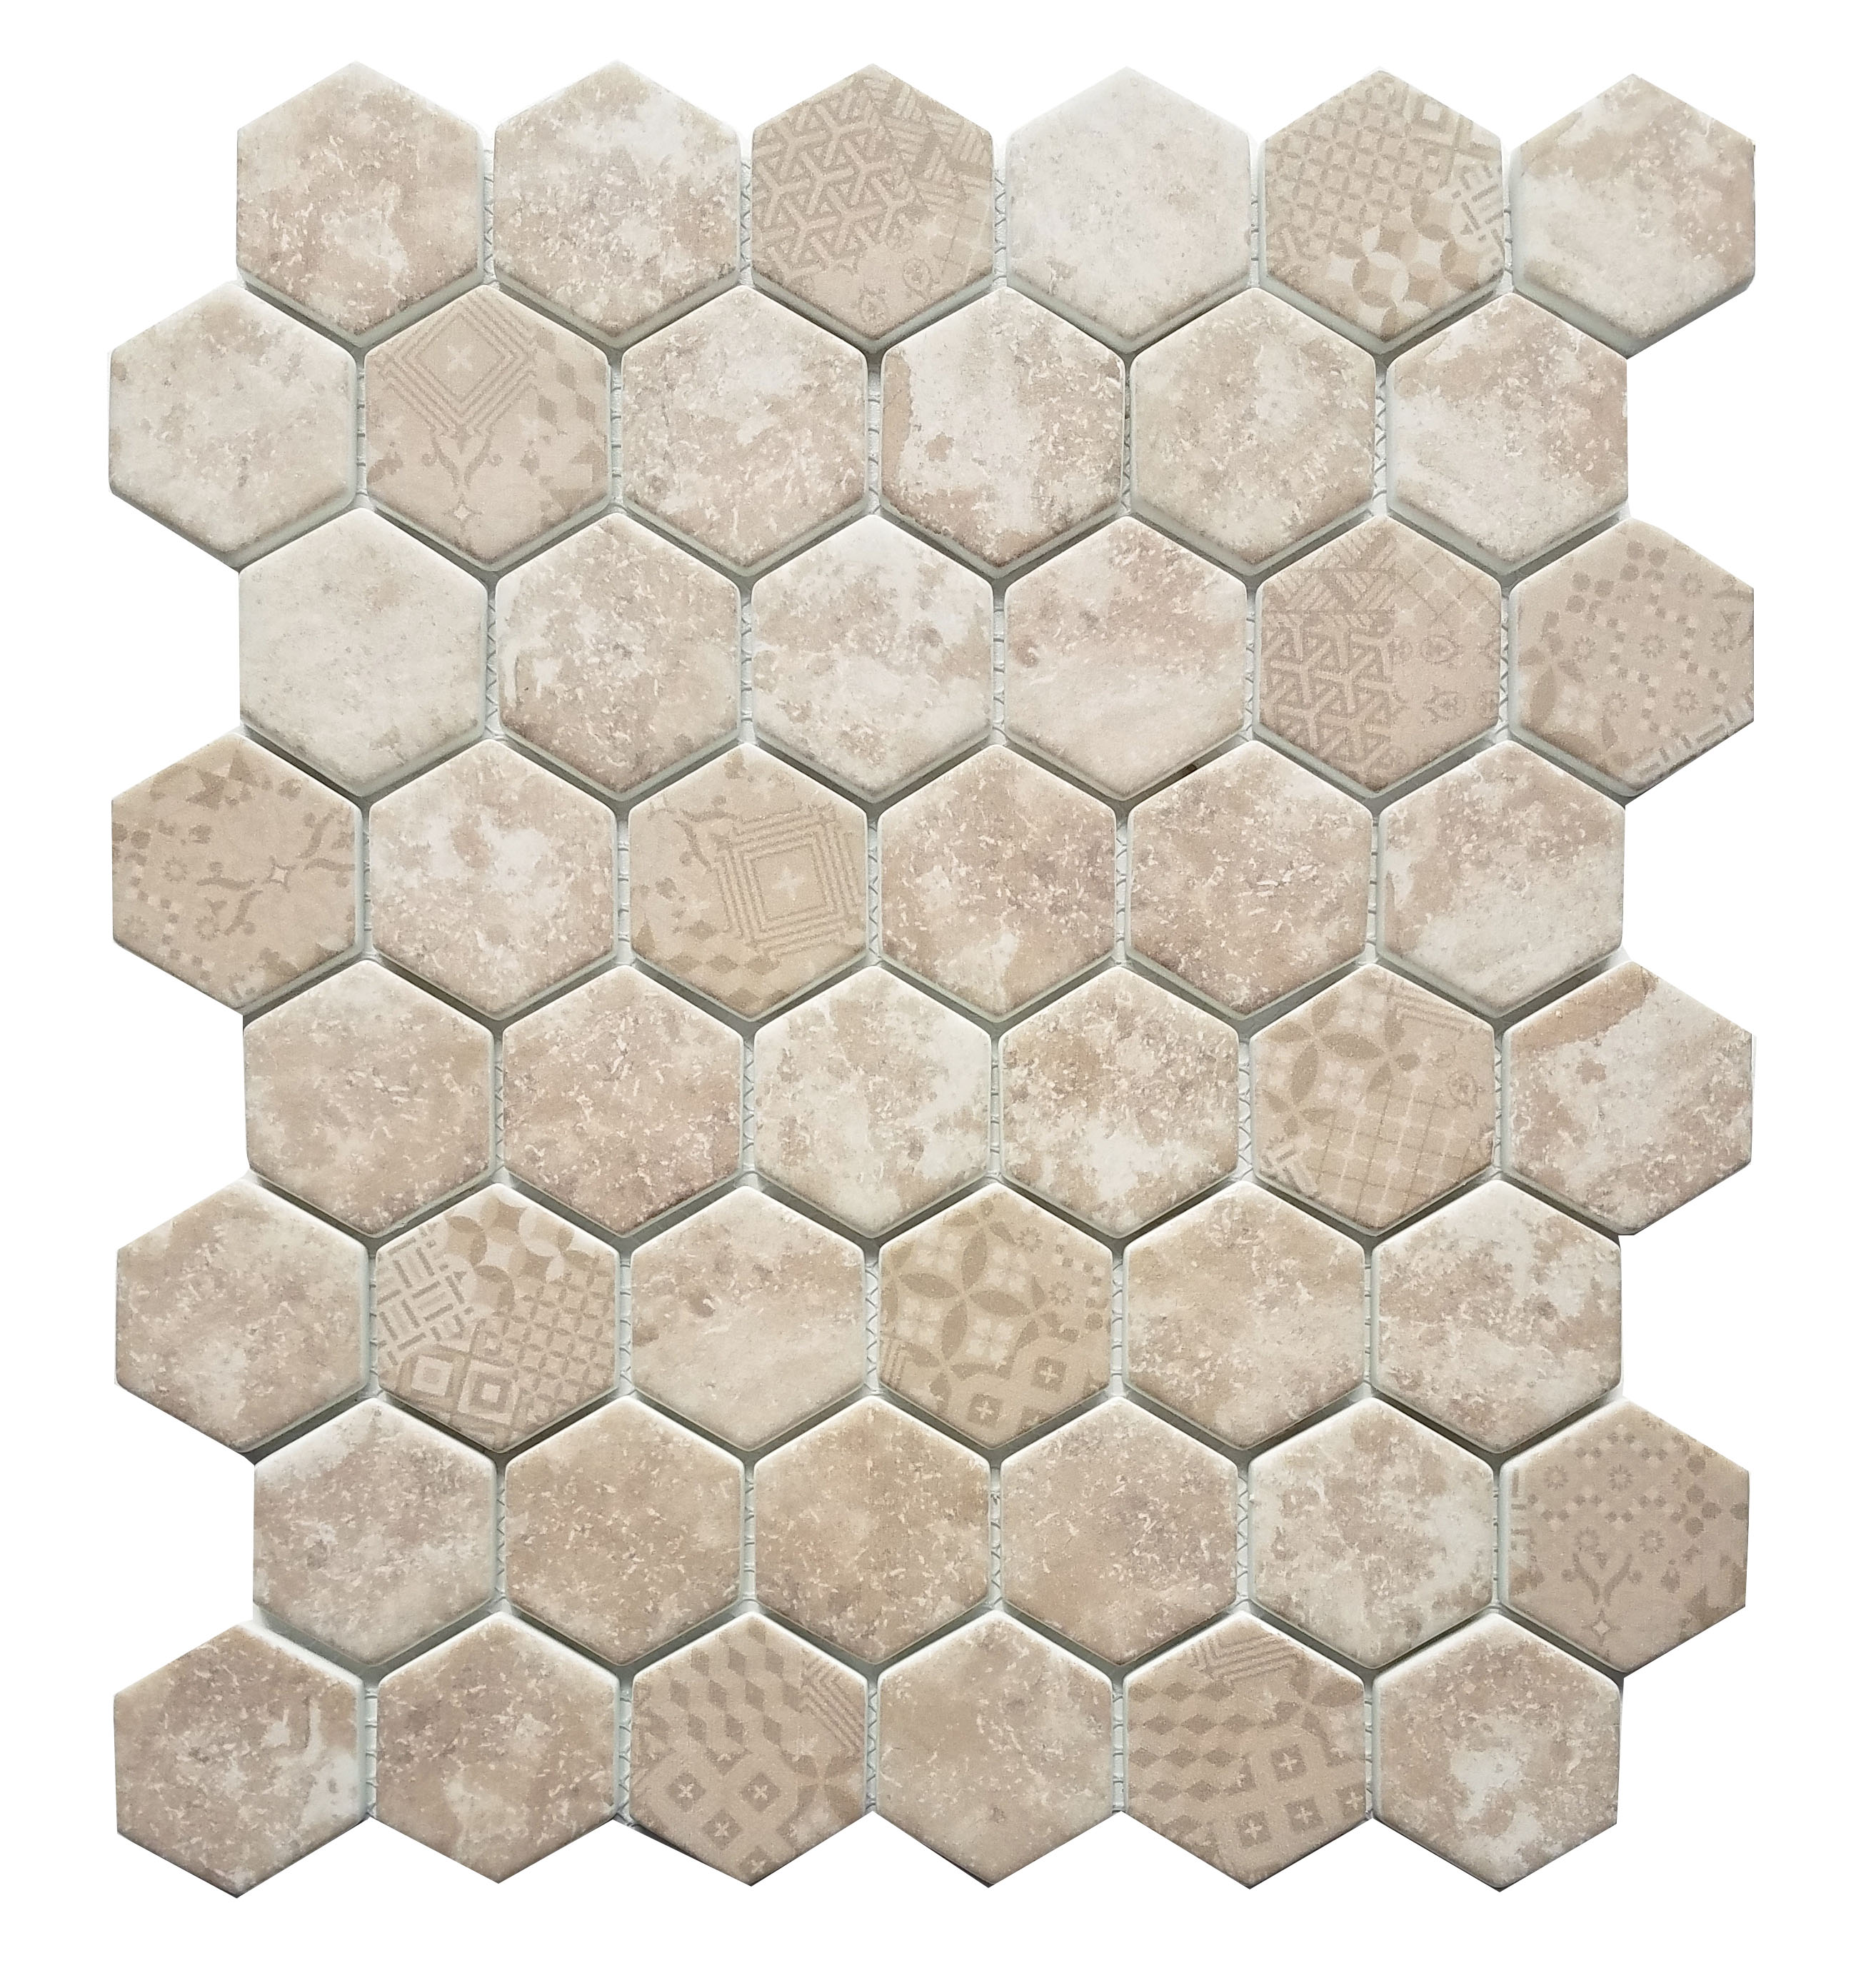 MA101-HX  2 x 2 Hexagon High density recycle glass 